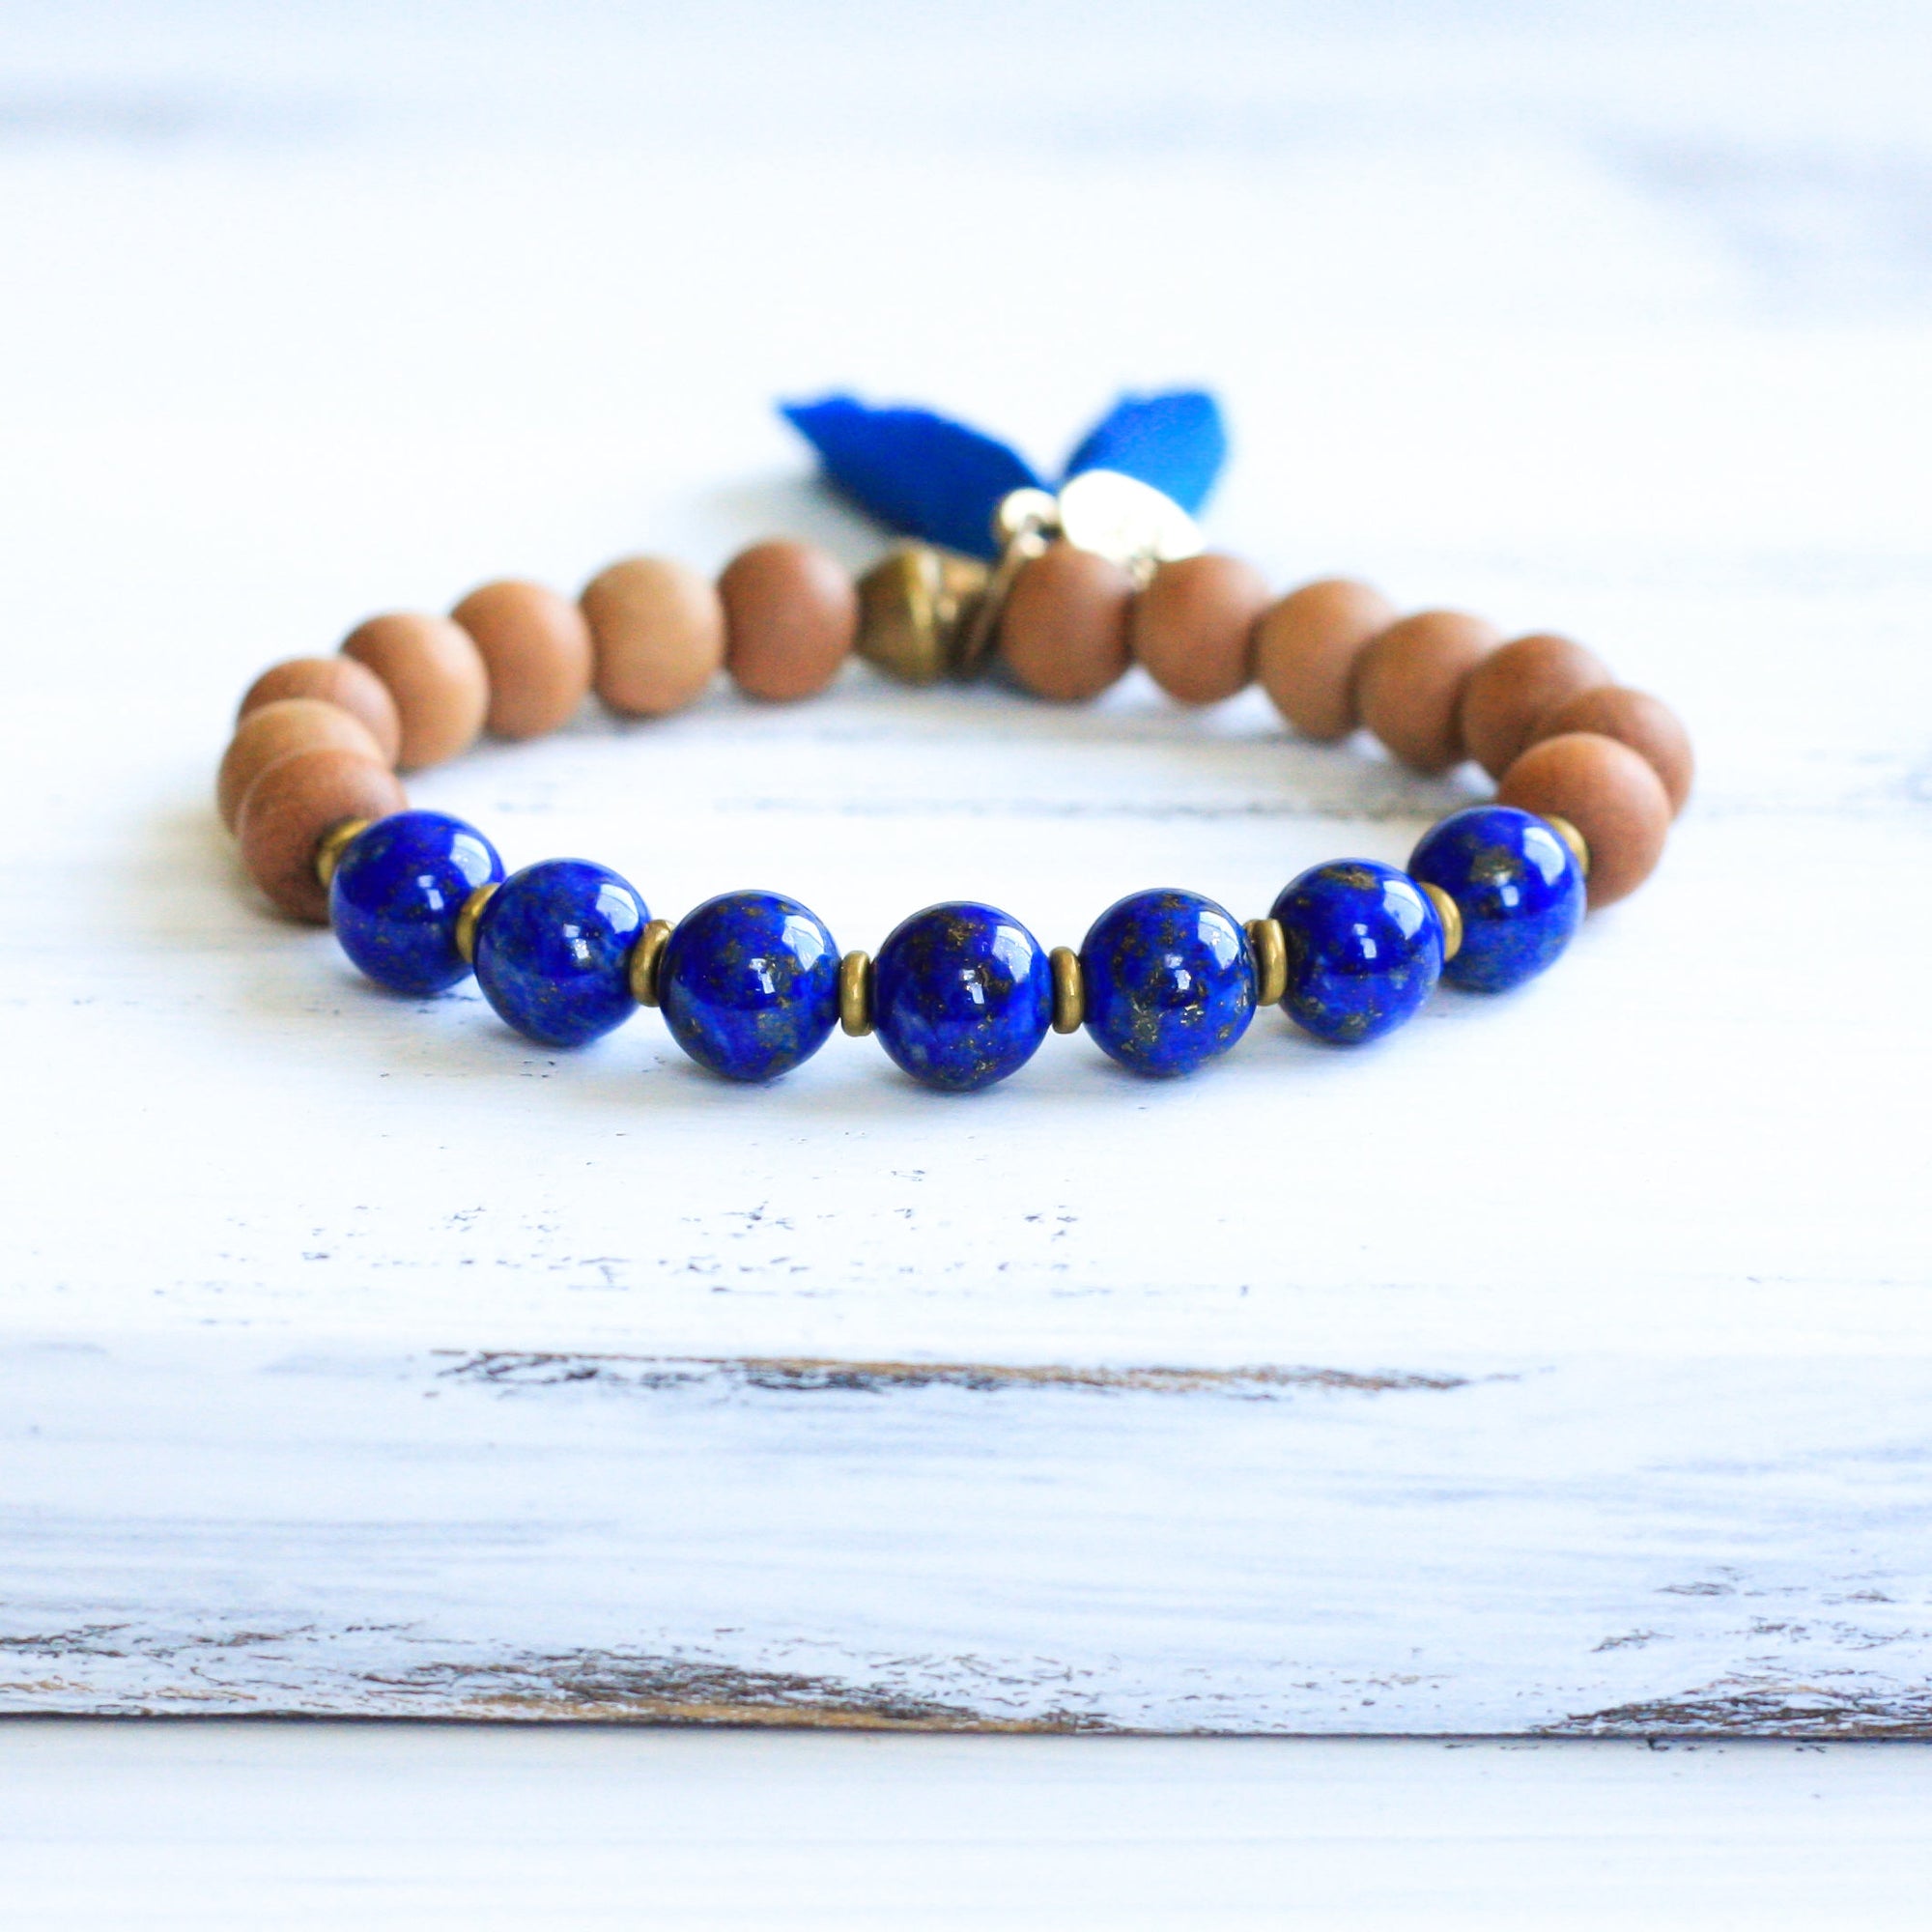 Jewelry to Bring Positivity: Lapis Lazuli, Jasper and Rose Quartz Brac